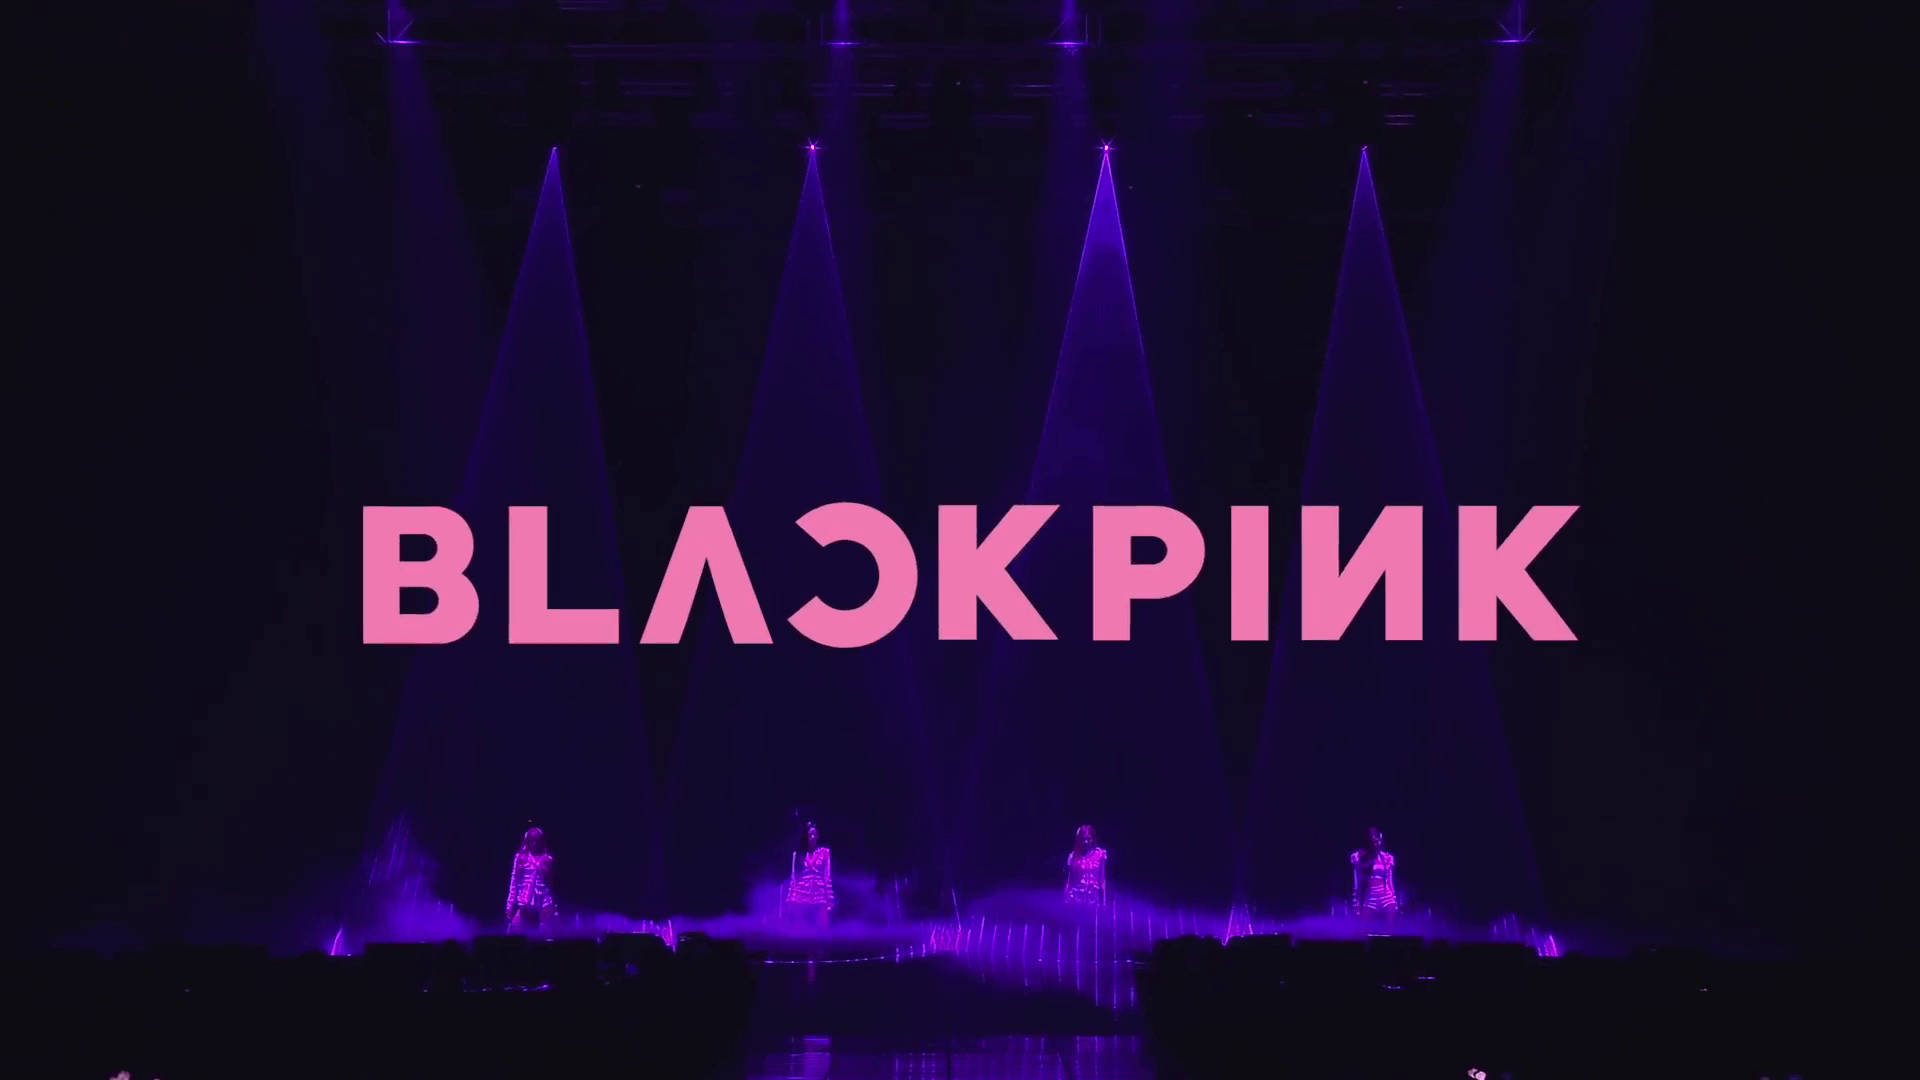 Blackpink On The Concert Stage Background